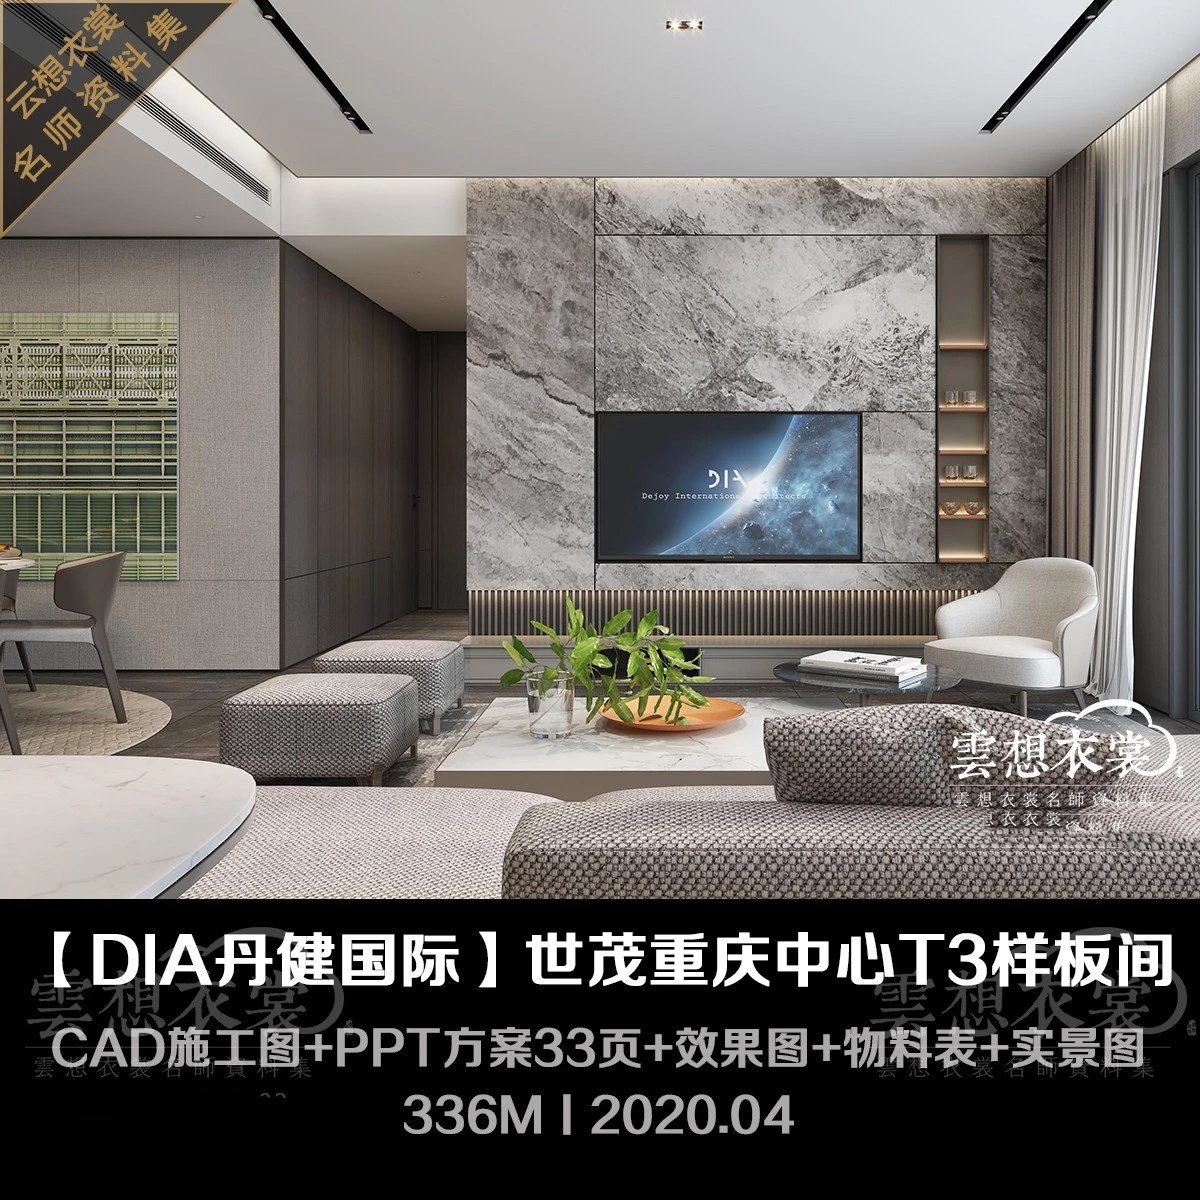 【DIA丹健国际】世茂重庆中心170m²样板丨施工图+物料+PPT方案33